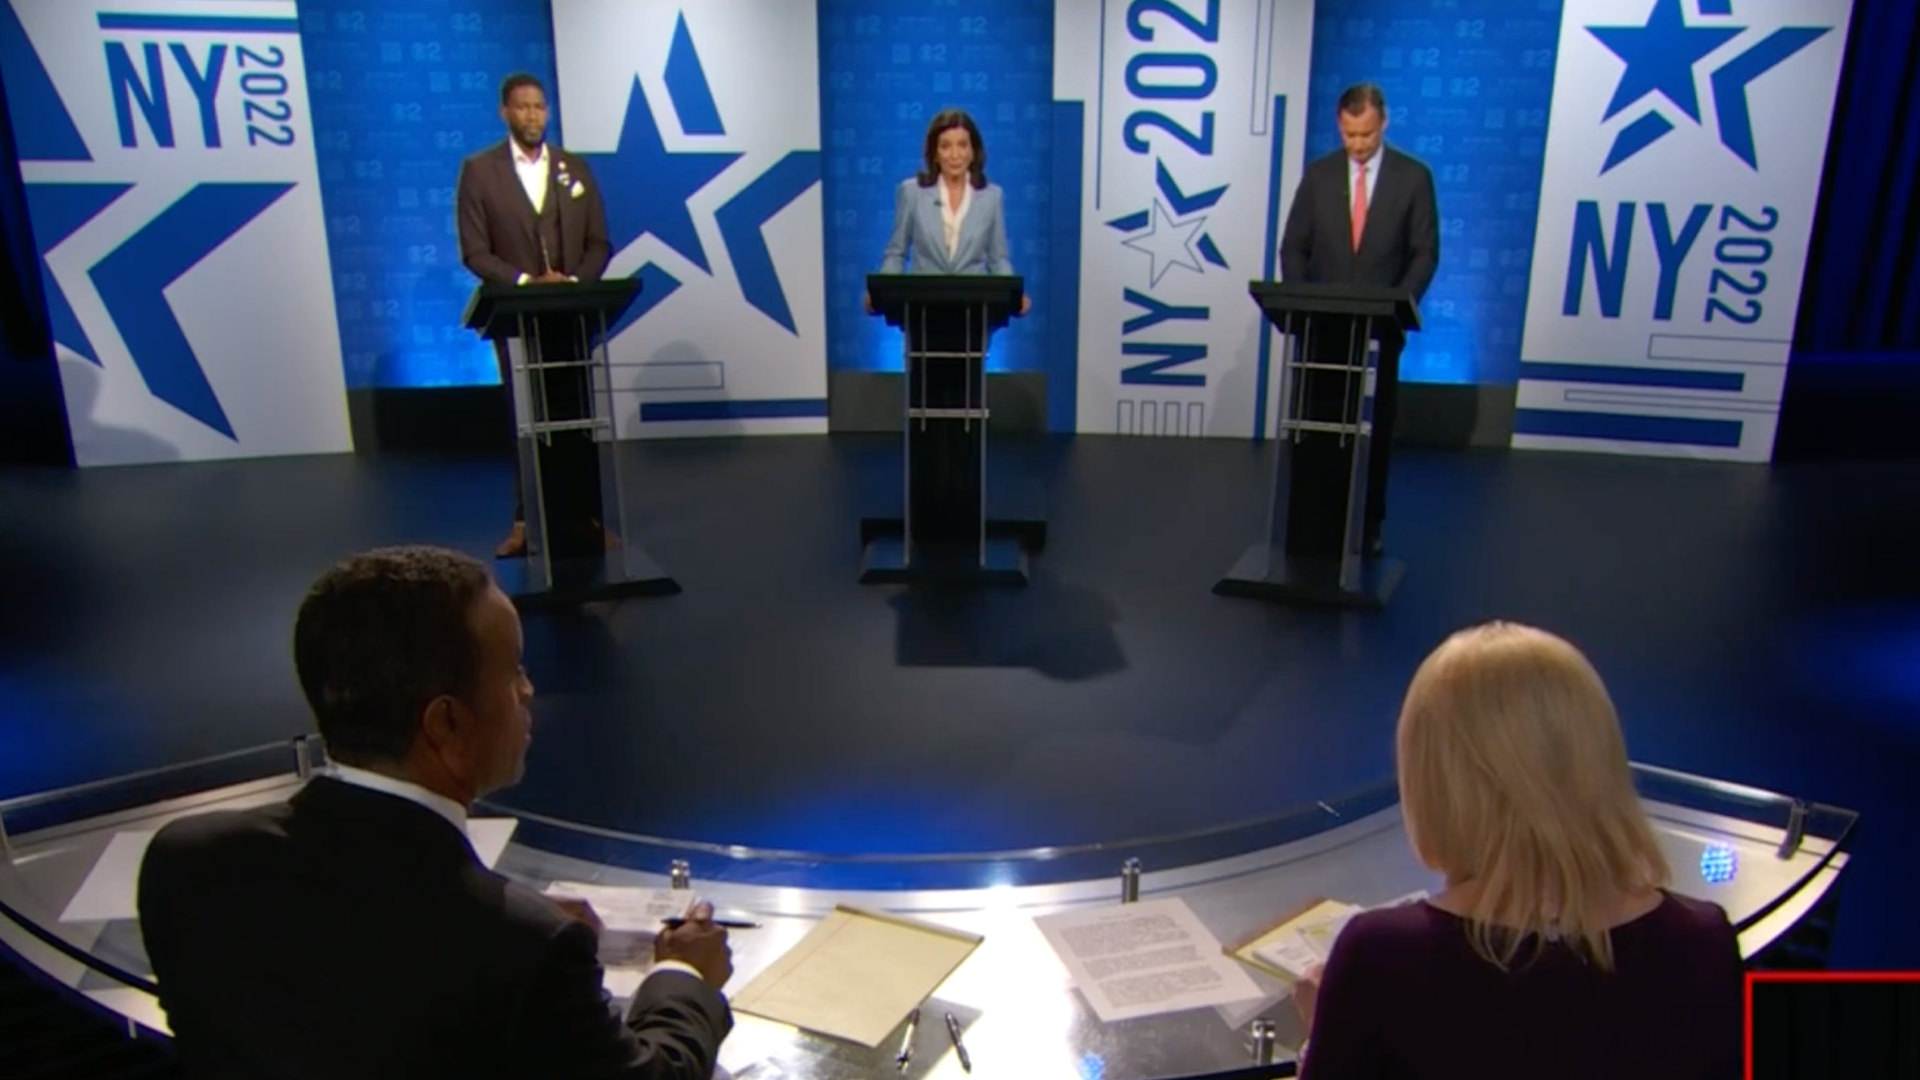 CBS News Hosts New York Governor Democratic Primary Debate